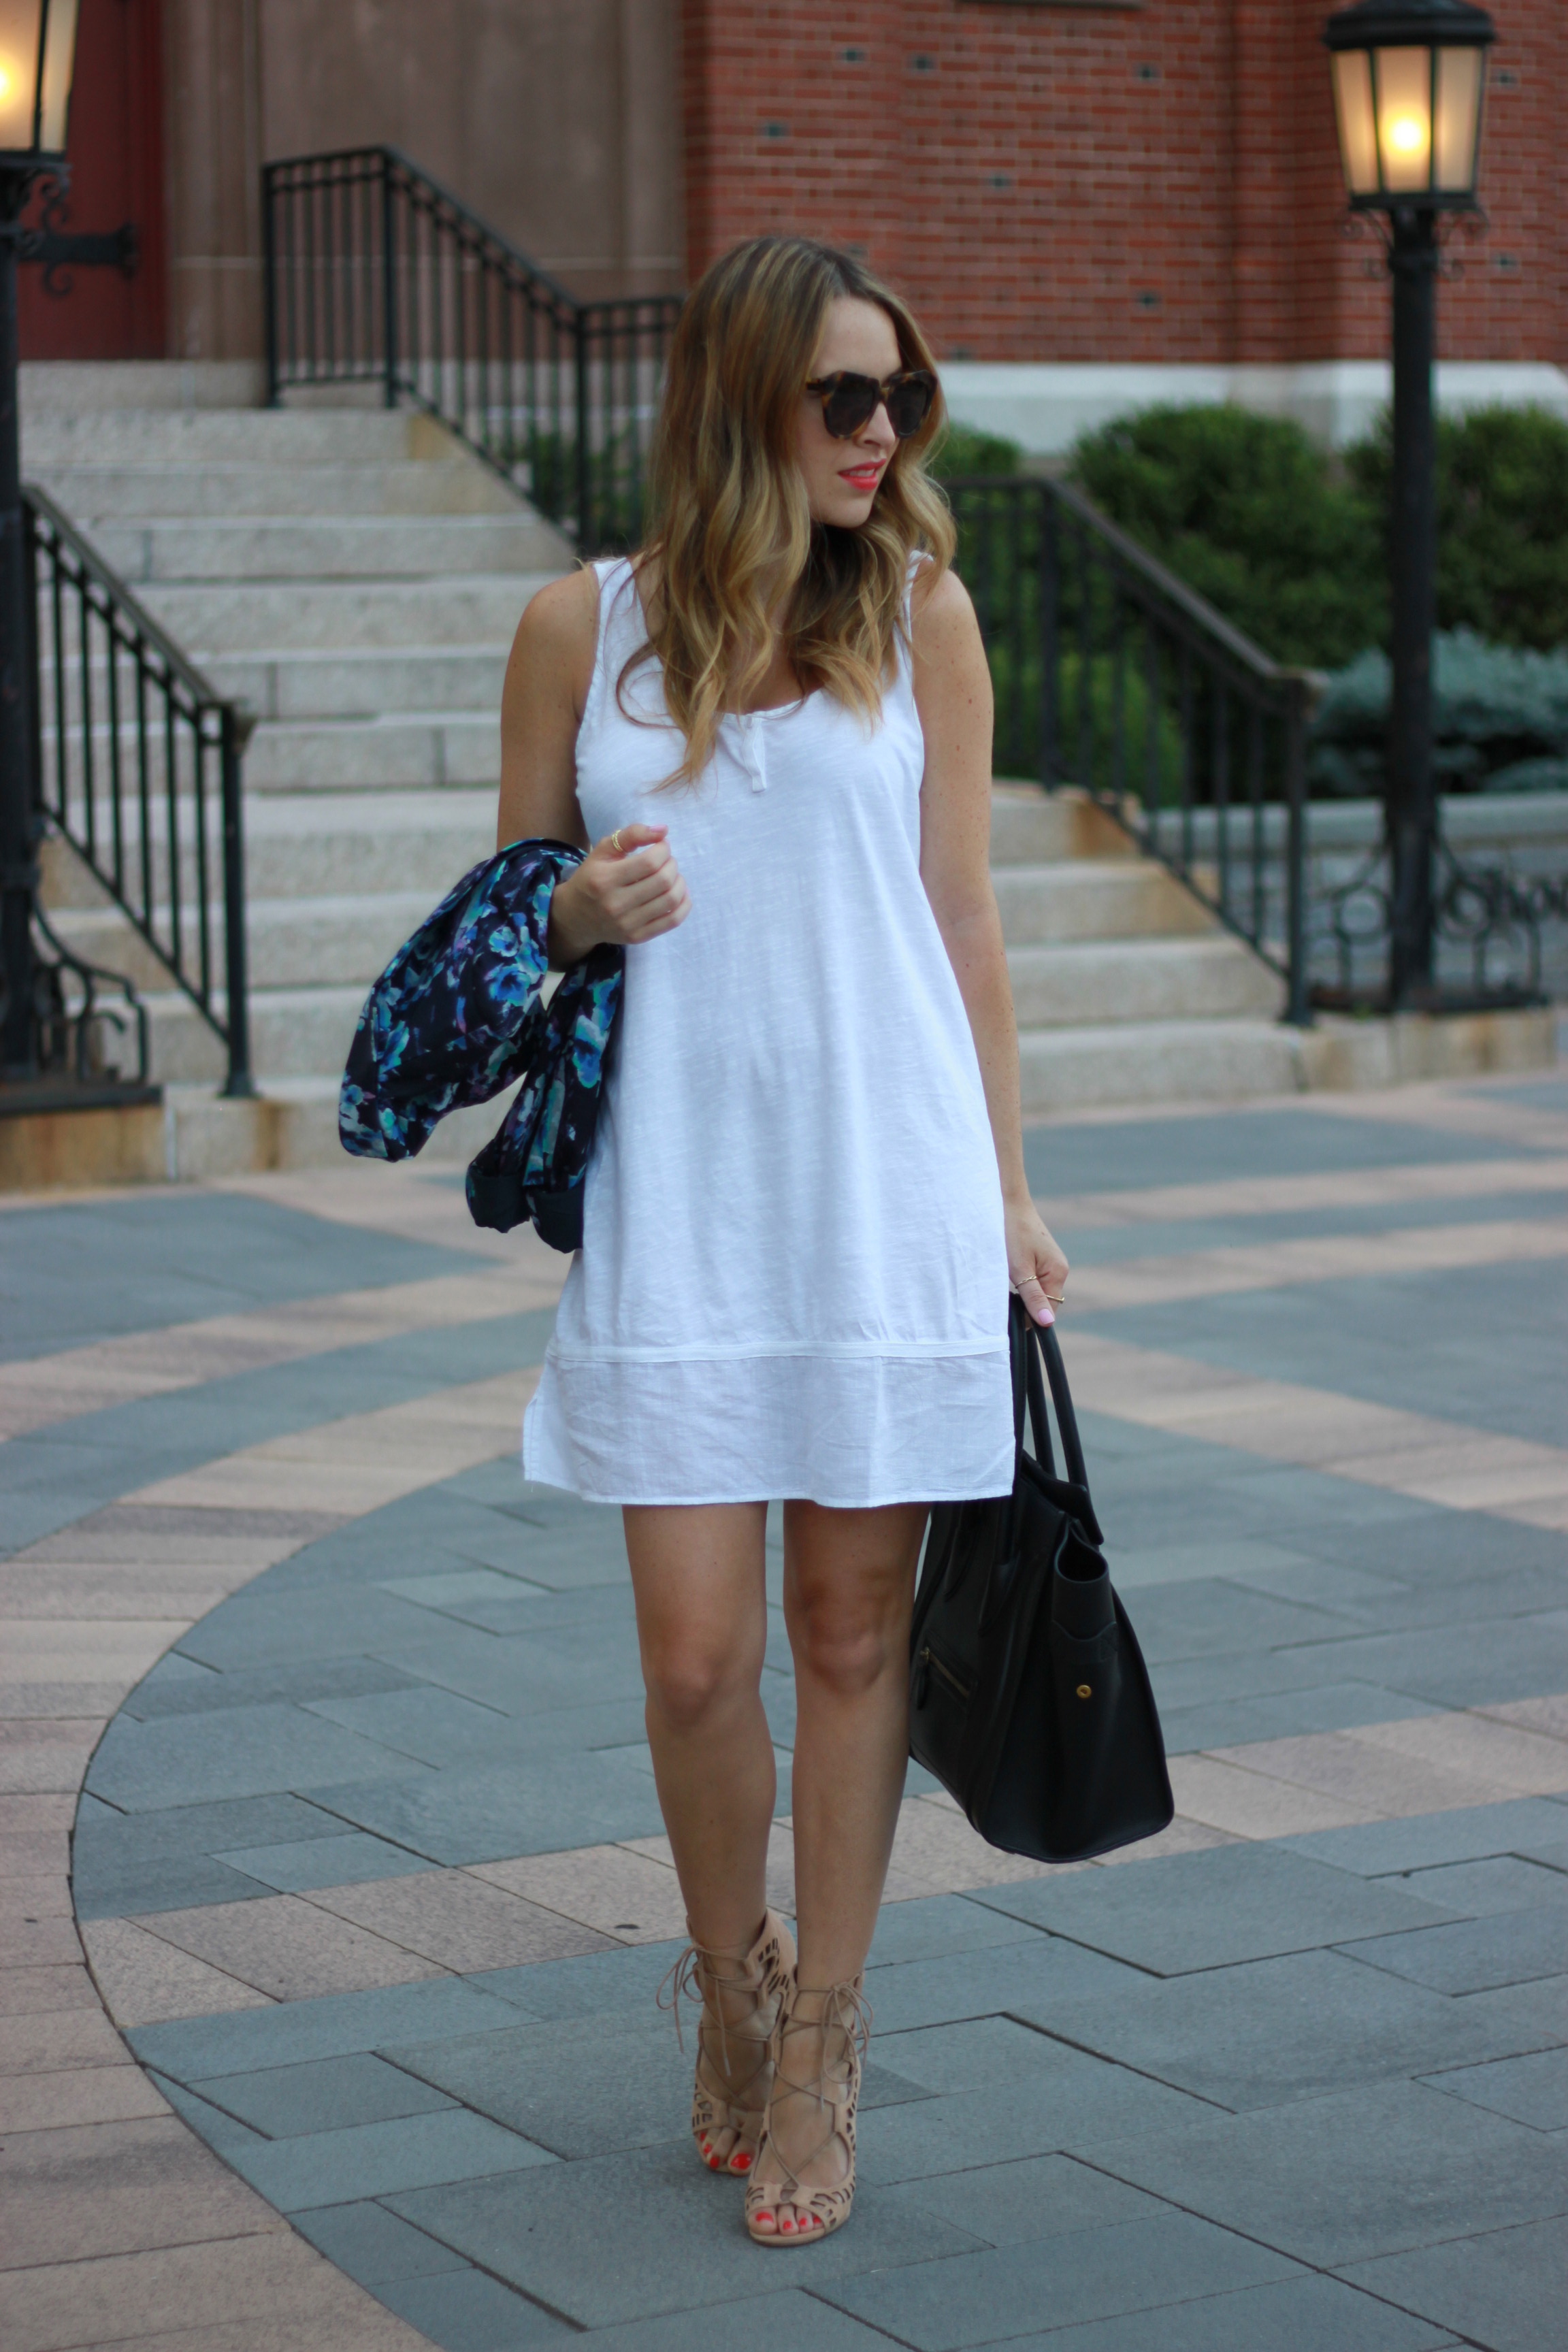 The Little White Dress